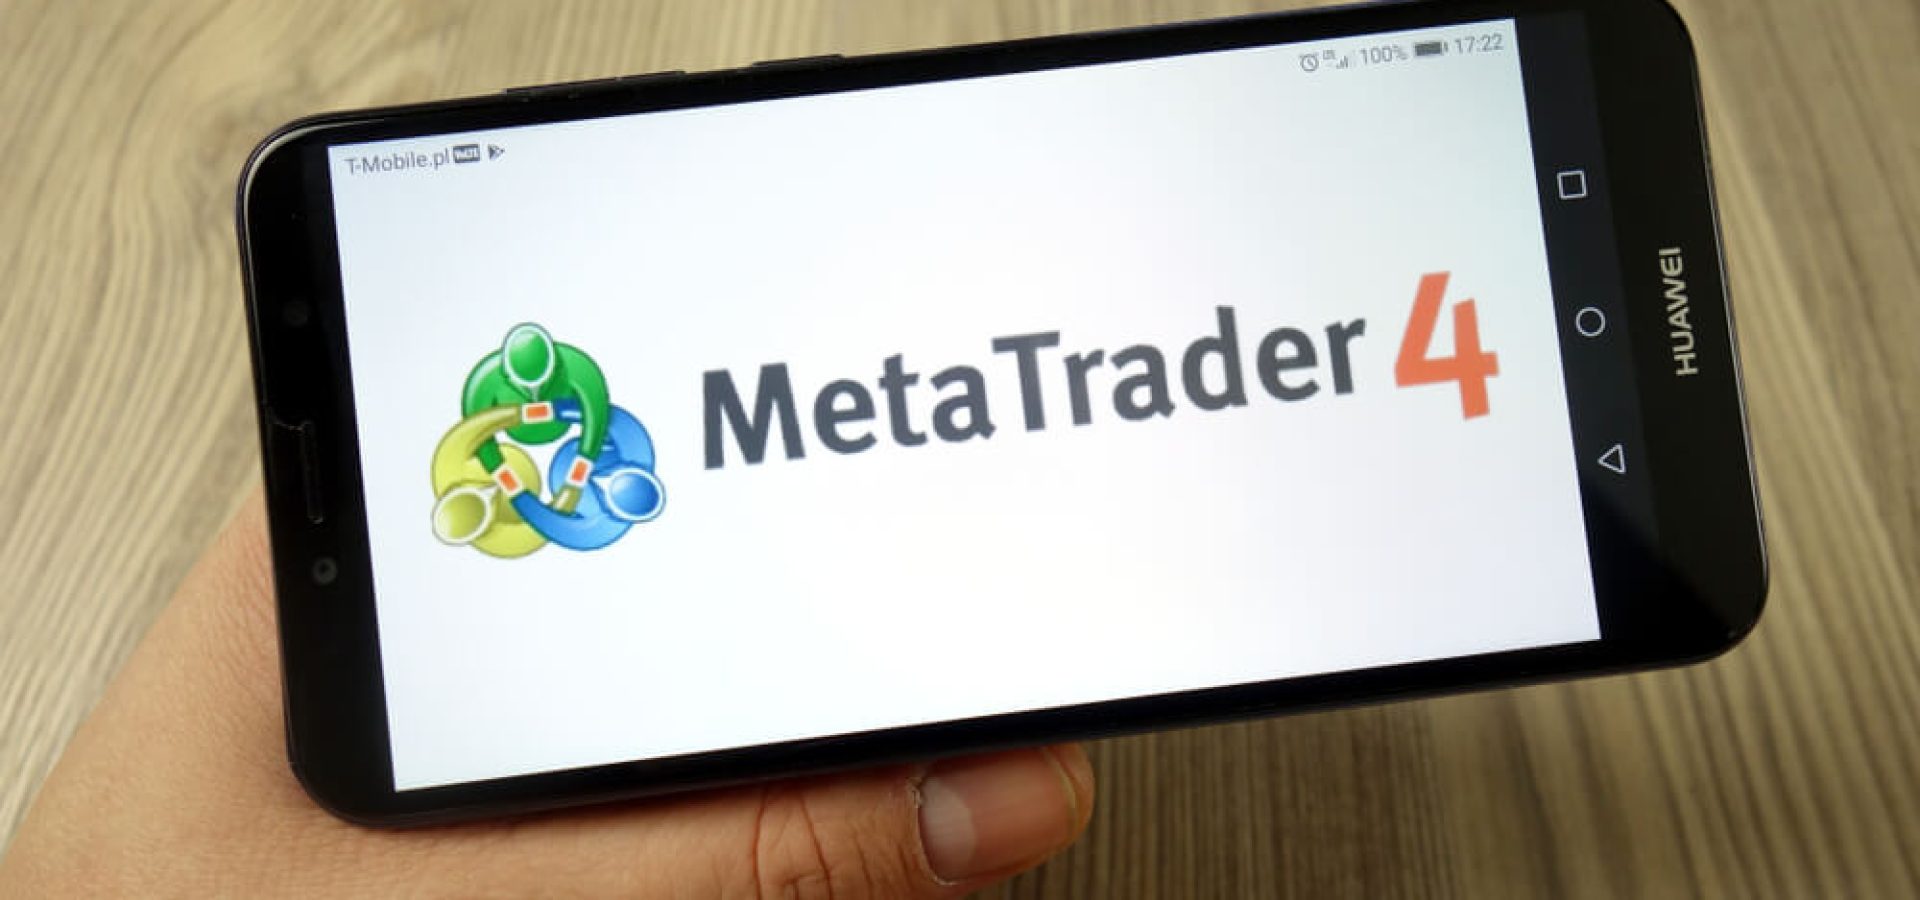 Skilling - : MetaTrader 4 logo displayed on a mobile phone.